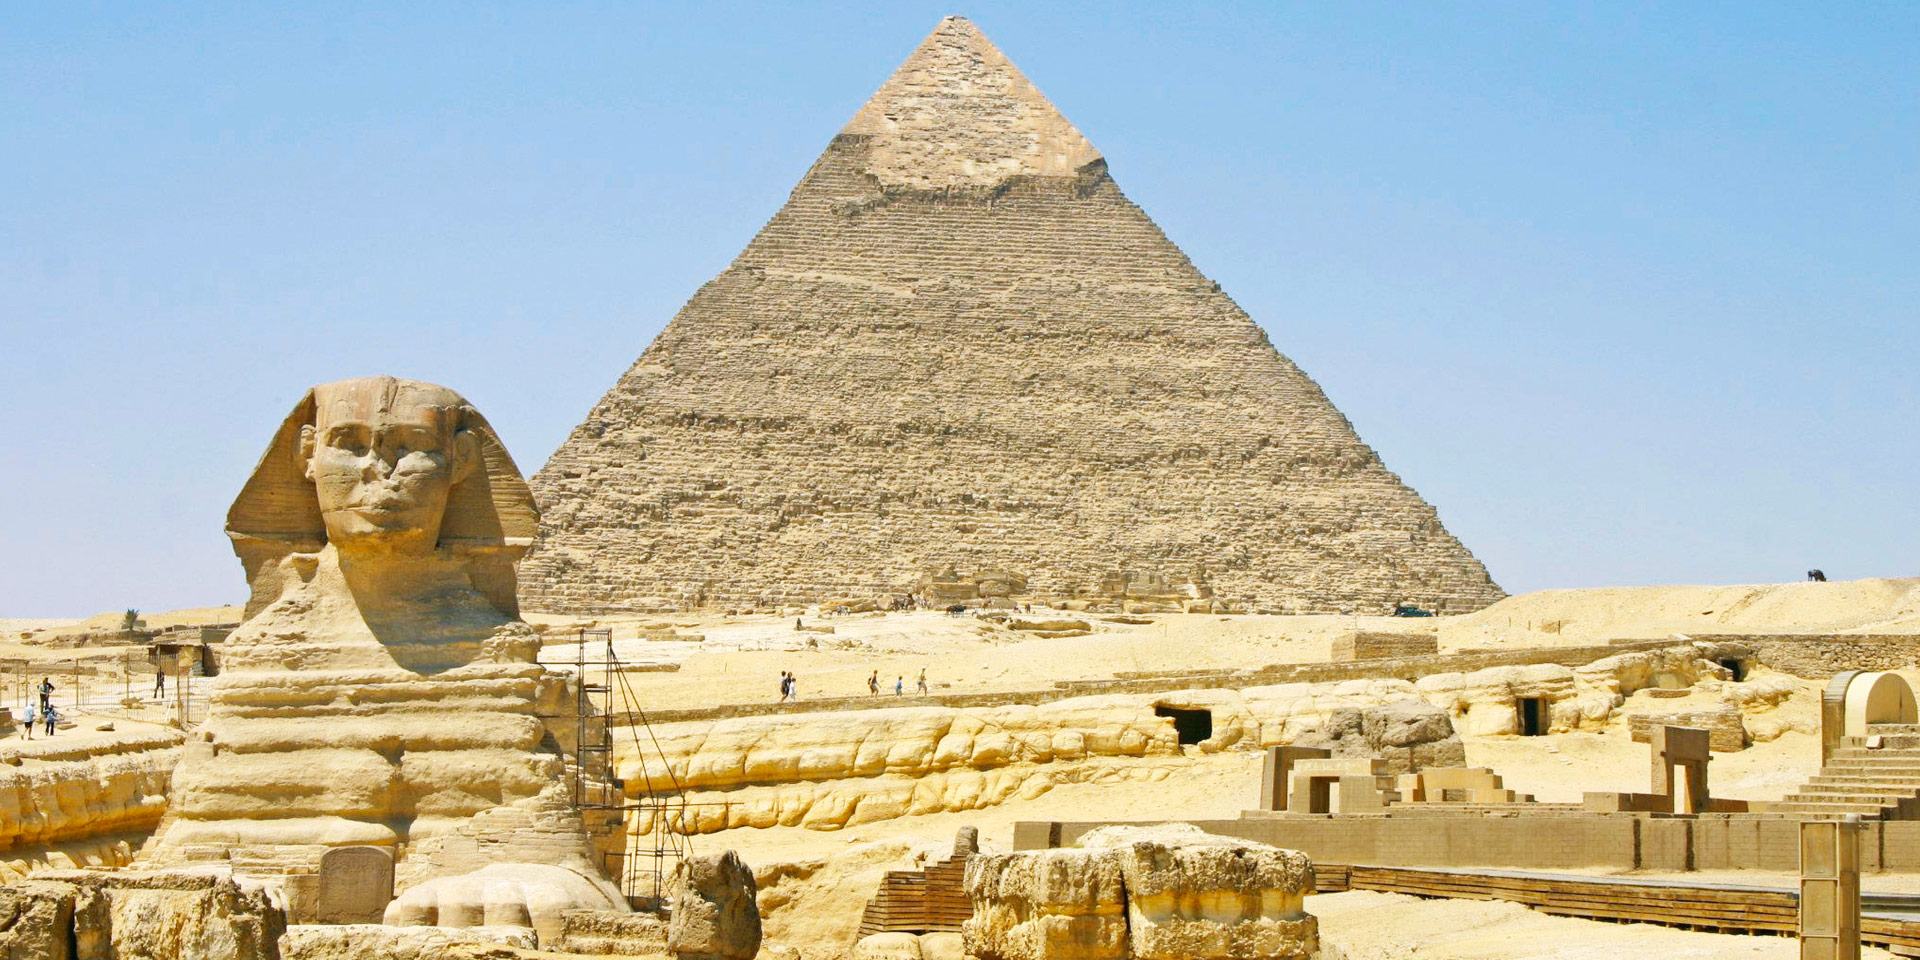 Misr piramidalari haqida. Пирамиды Гизы в Египте. Пирамида Хеопса сфинкс древний Египет. Сфинкс Хефрена. Пирамиды Гизы и сфинкс.